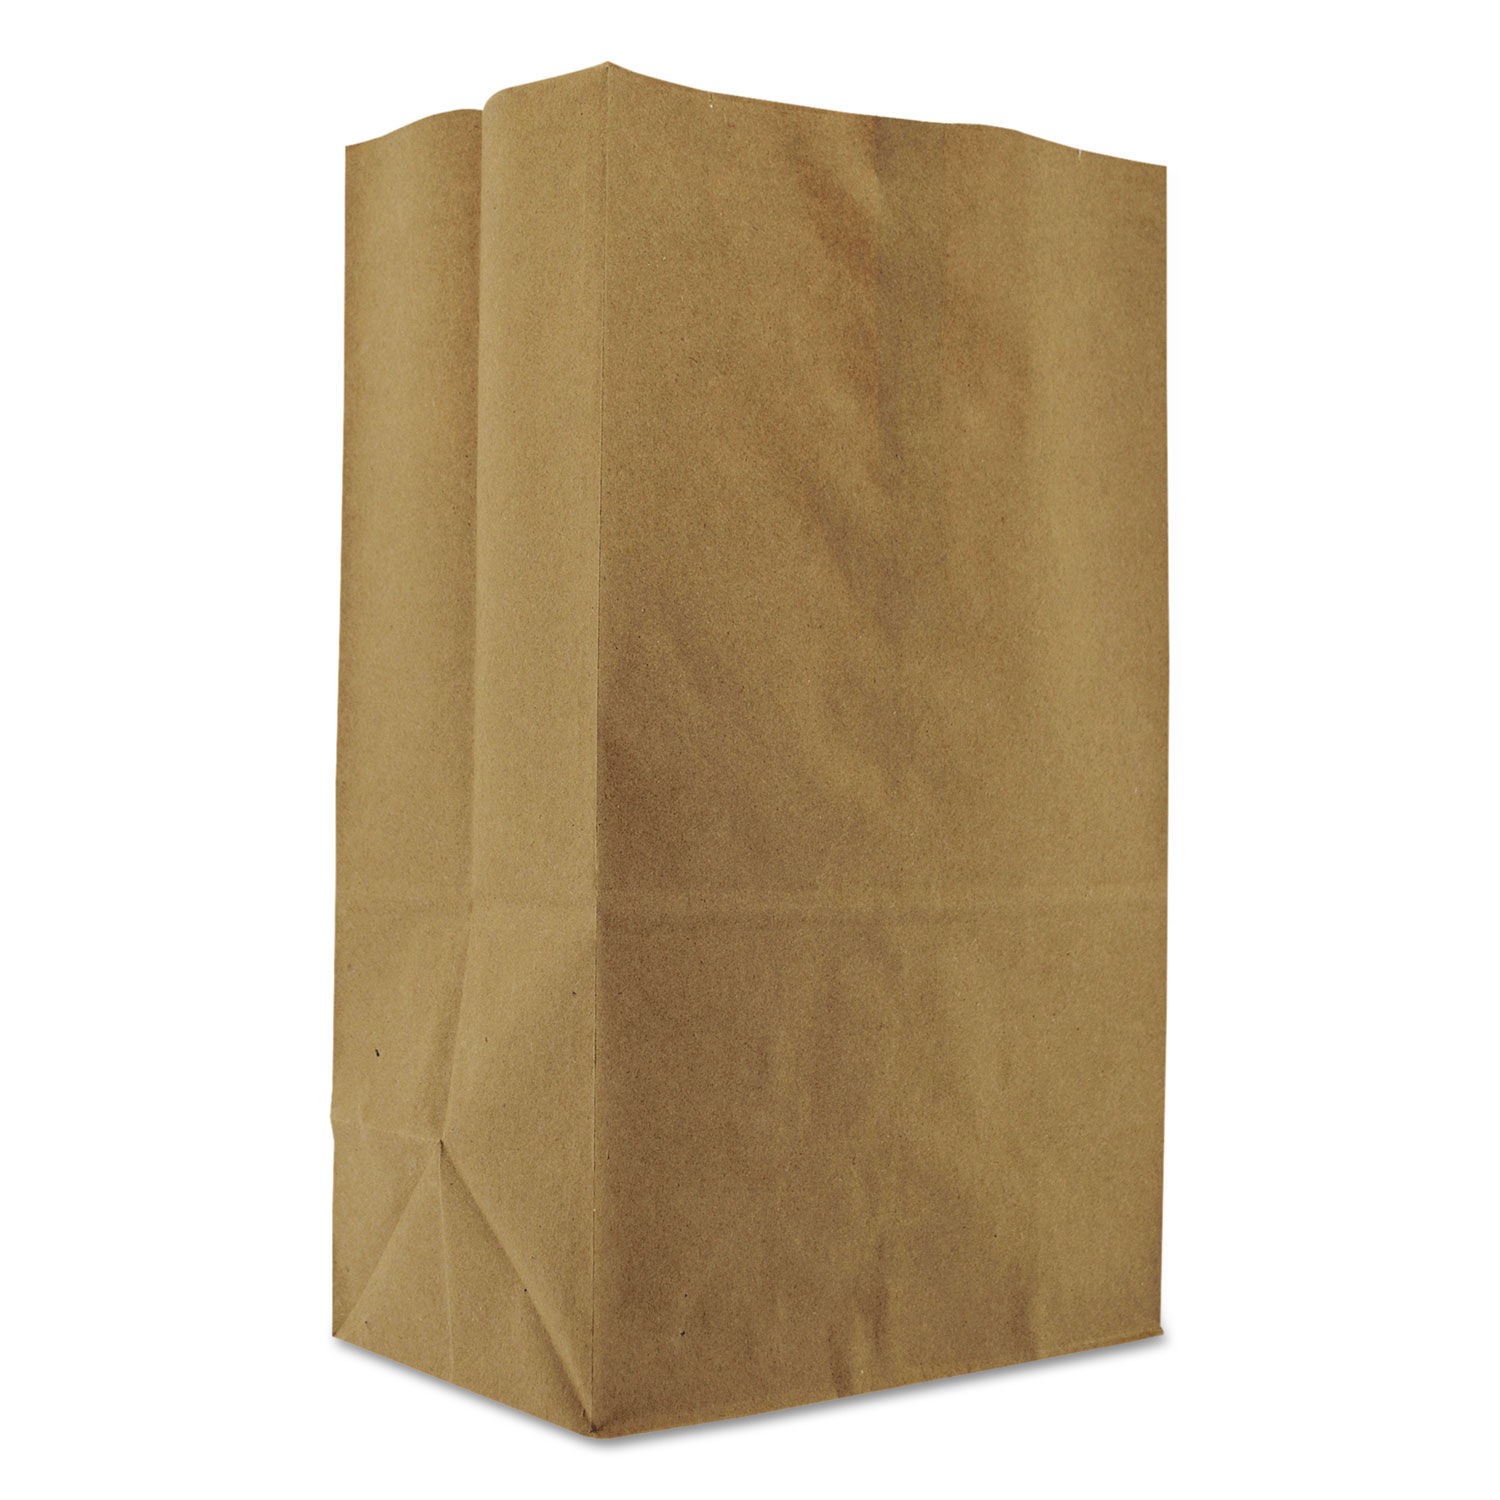 Grocery Paper Bags, 1/8 BBL, Kraft, 500 Bags